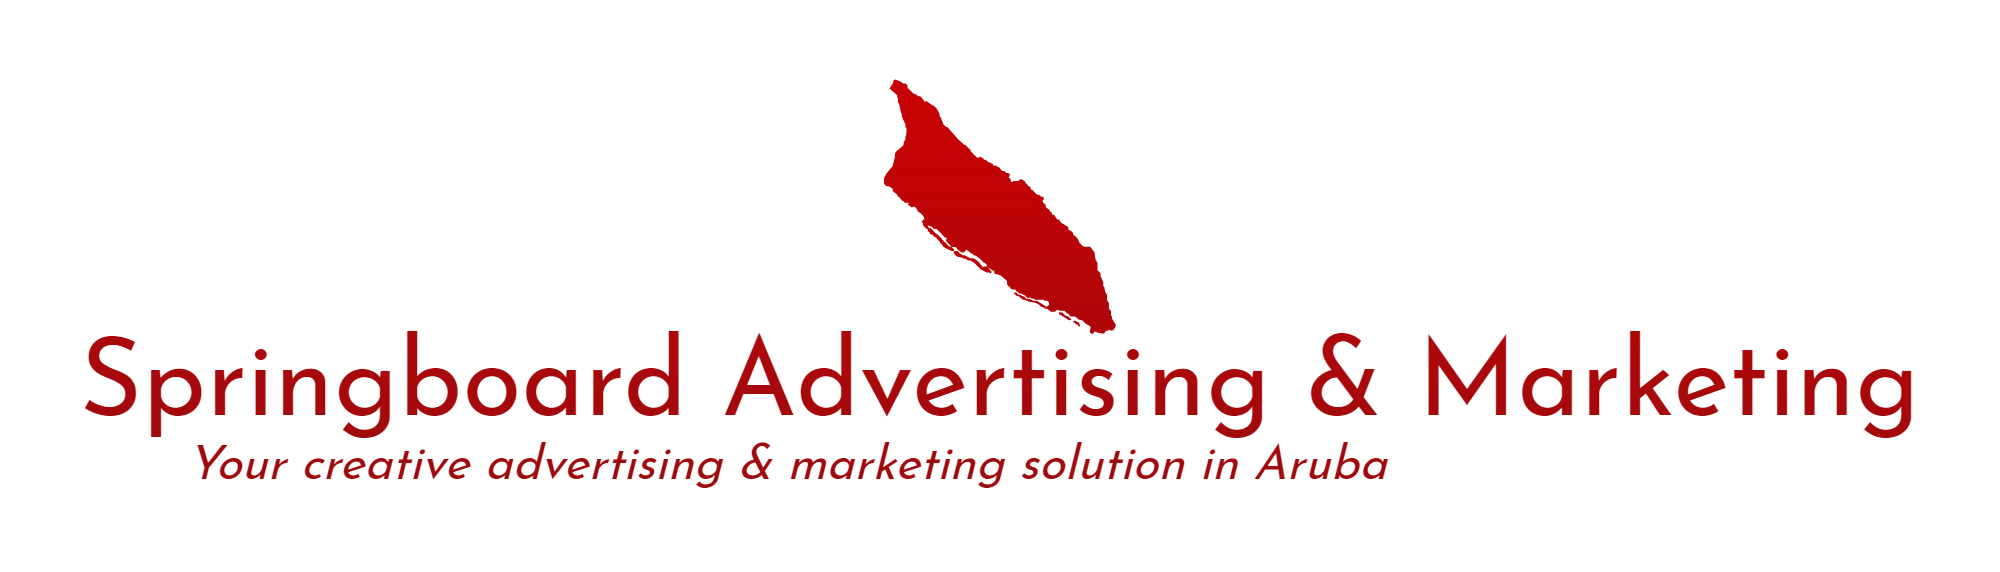 Springboard Marketing Aruba